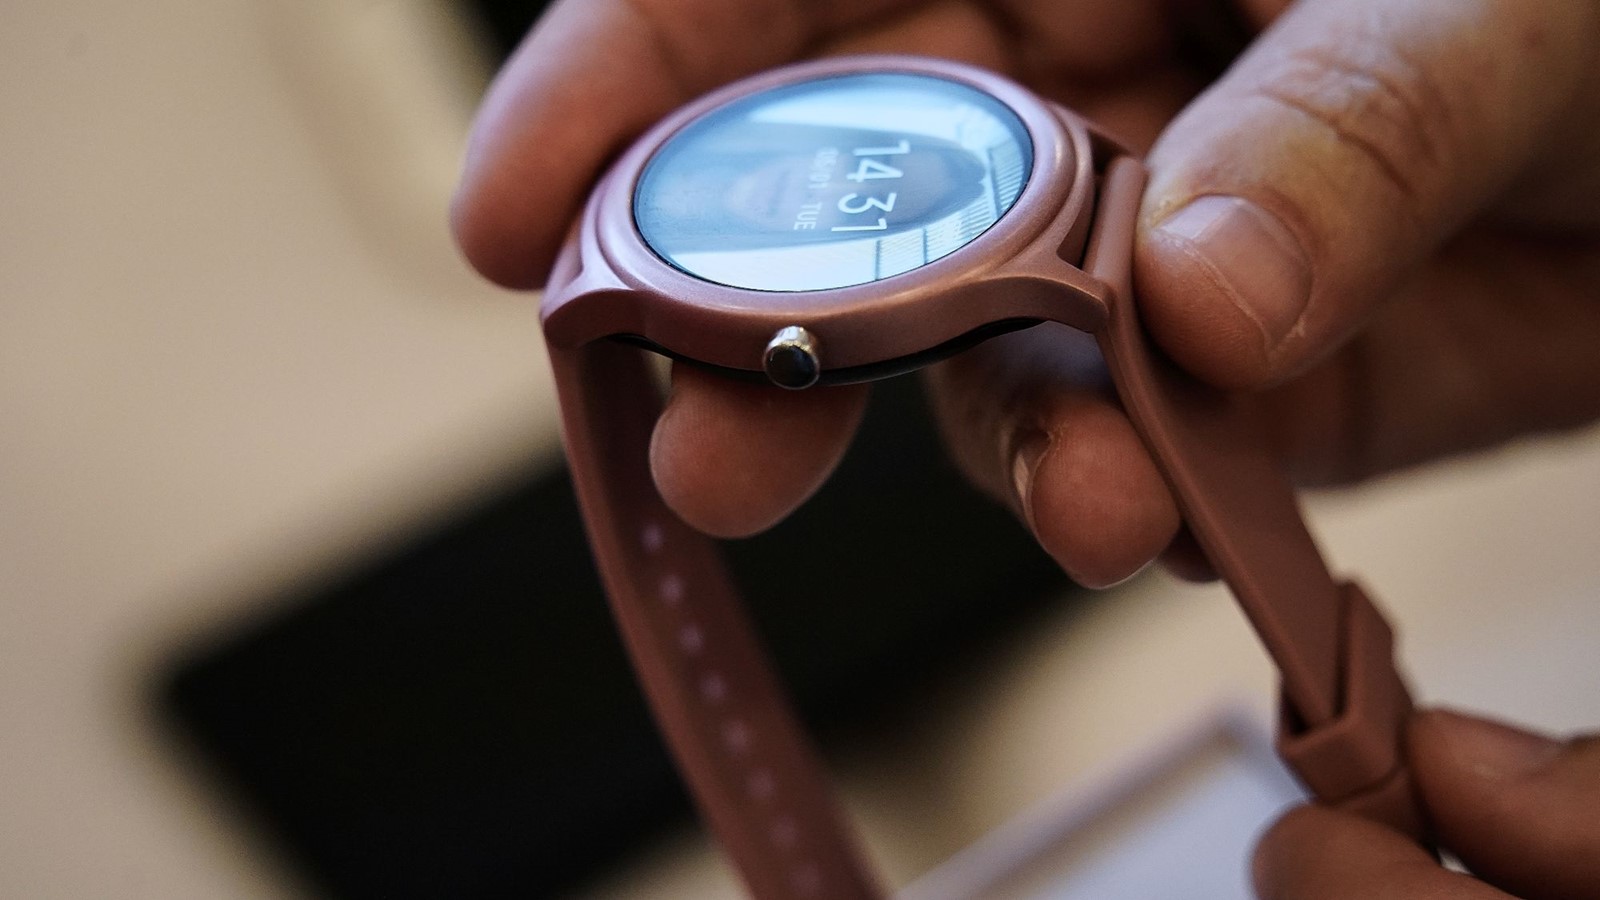 Testirali smo meanIT Smartwatch M30 Lady, pametni sat za ljepši spol -  Gadgeti @ Bug.hr